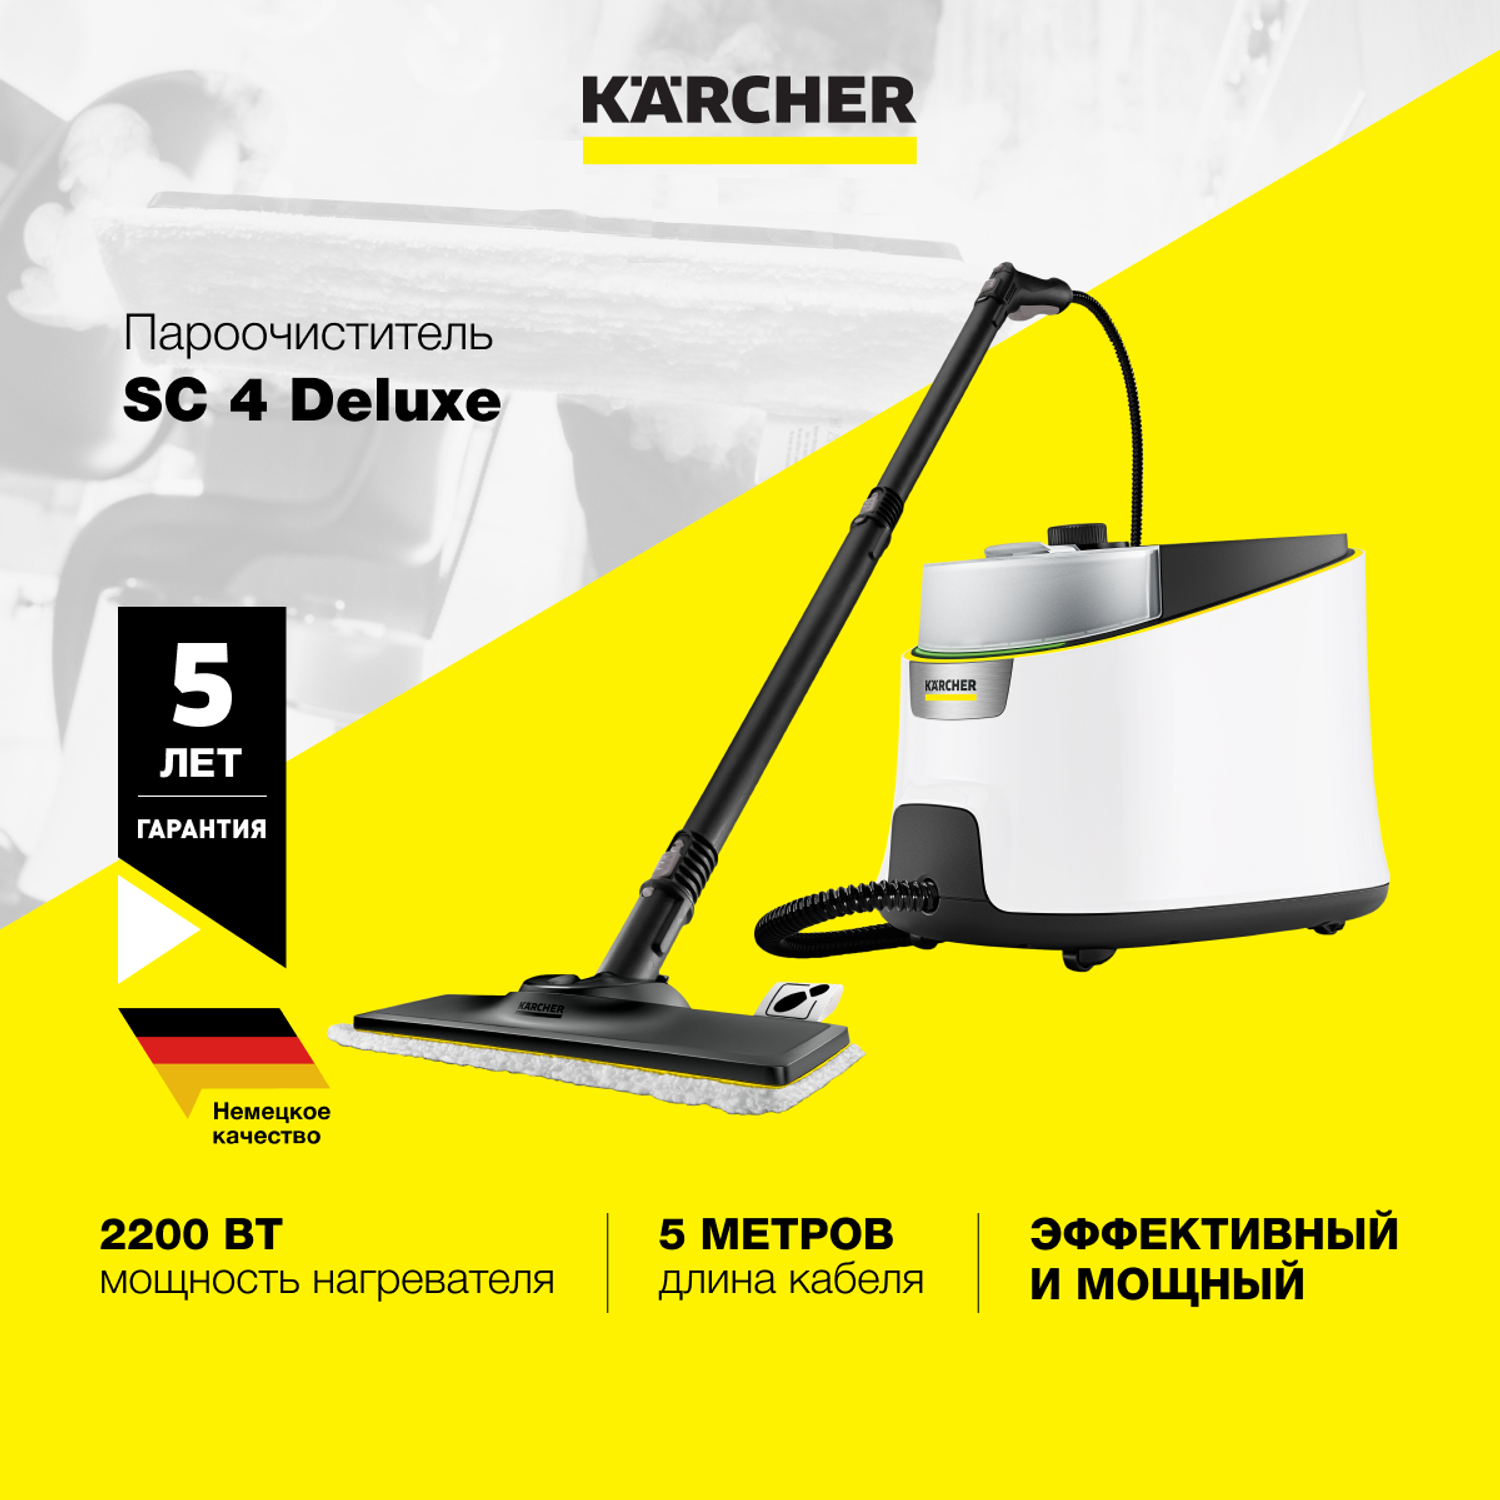 Пароочиститель Karcher SC 4 Deluxe EU 1.513-460.0 с трехступенчатым регулятором расхода пара на корпусе - фото 1